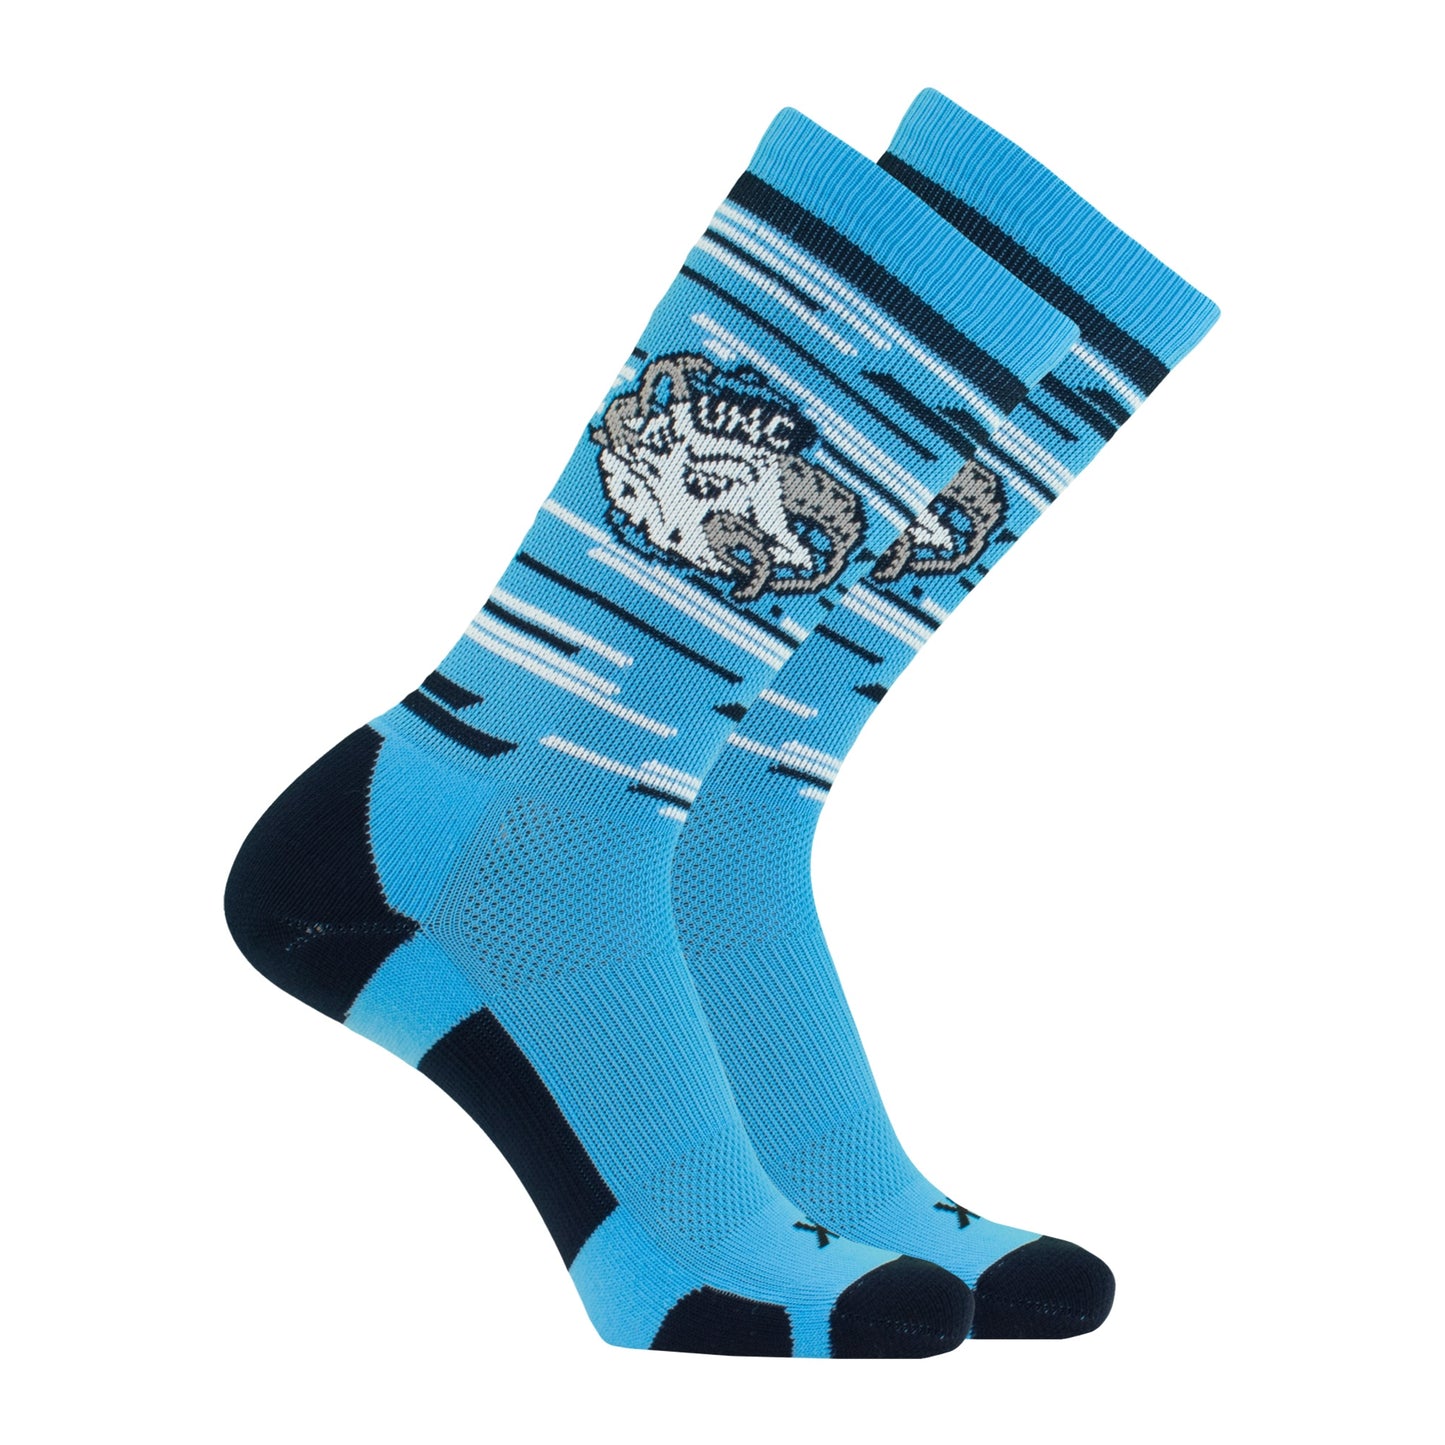 UNC Chapel Hill Socks in Crew Length with Ram Logo